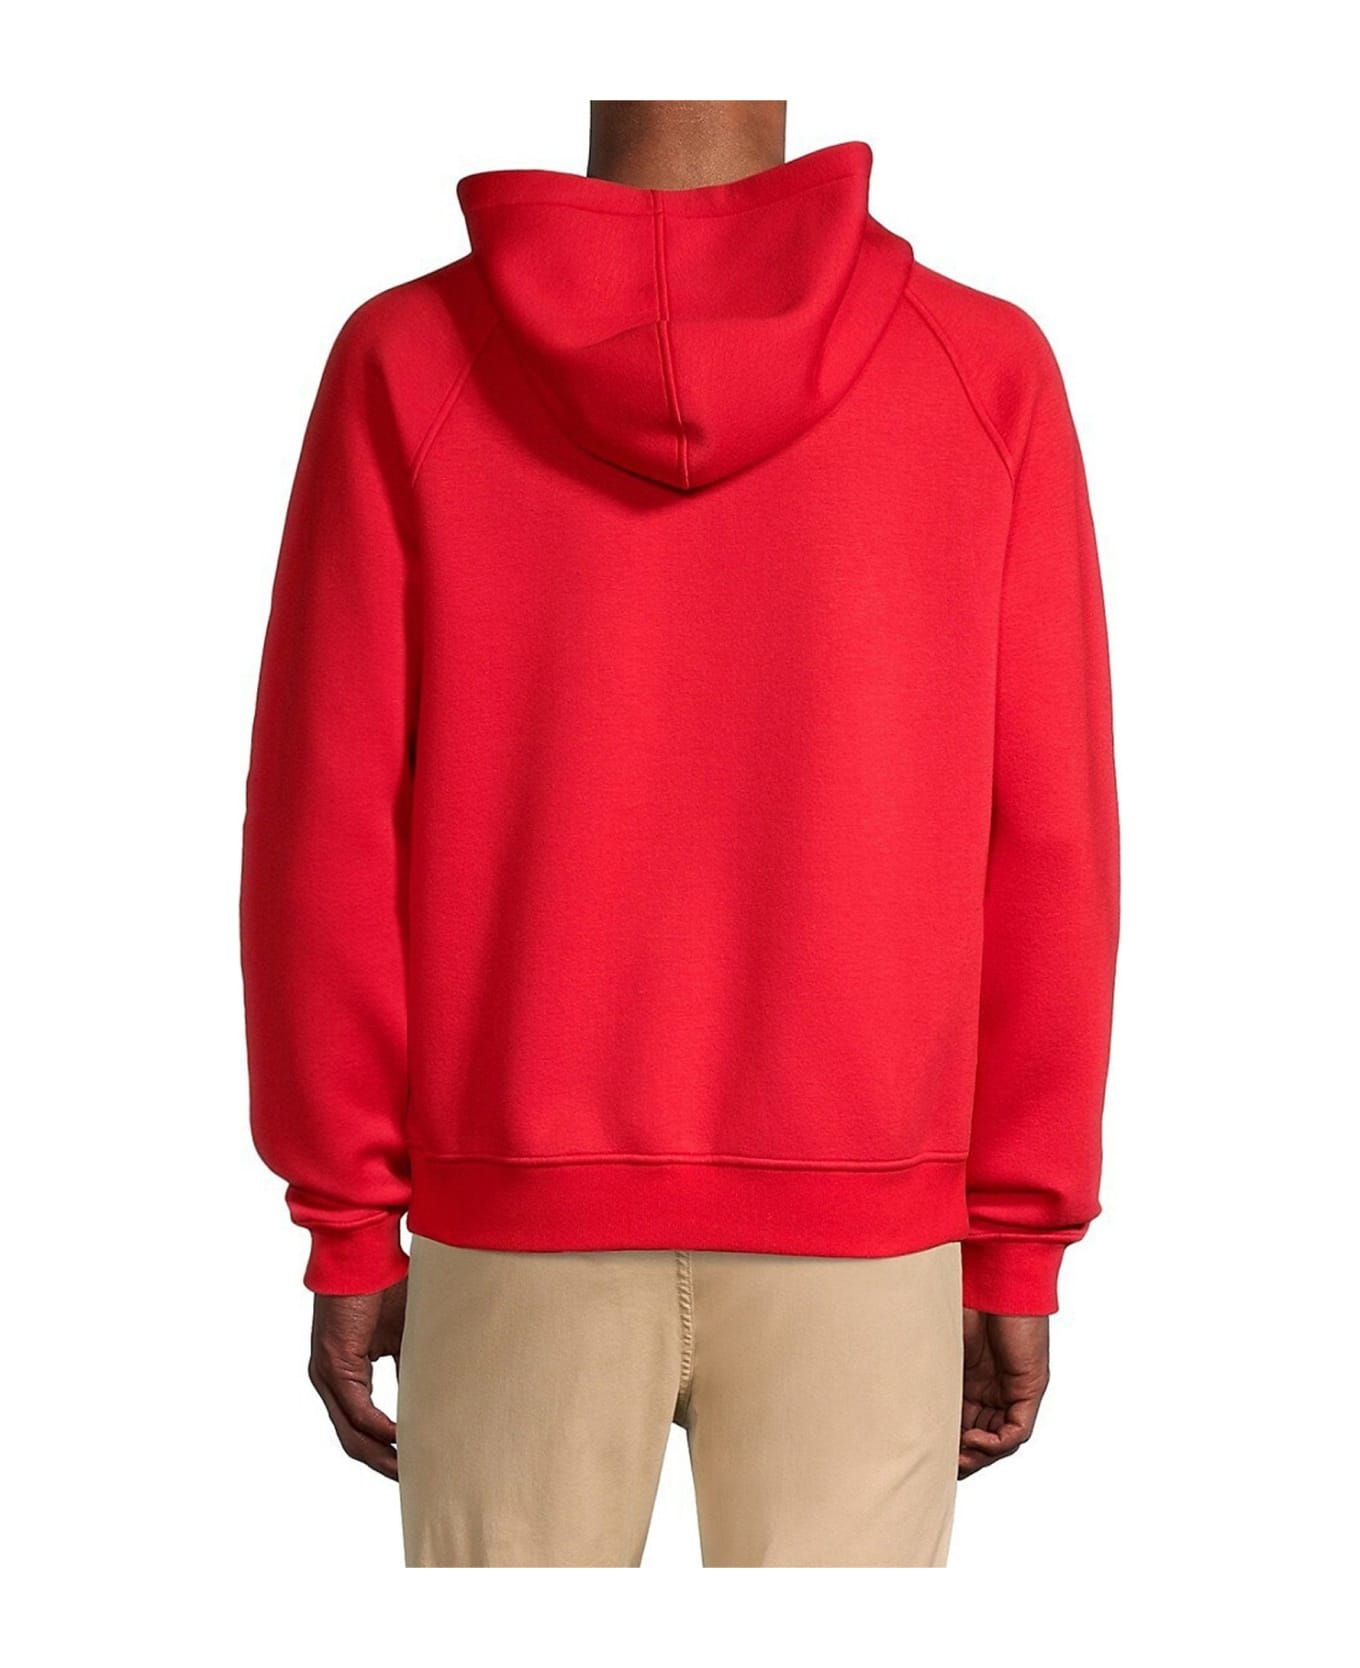 Kiton Hooded Sweatshirt - Red